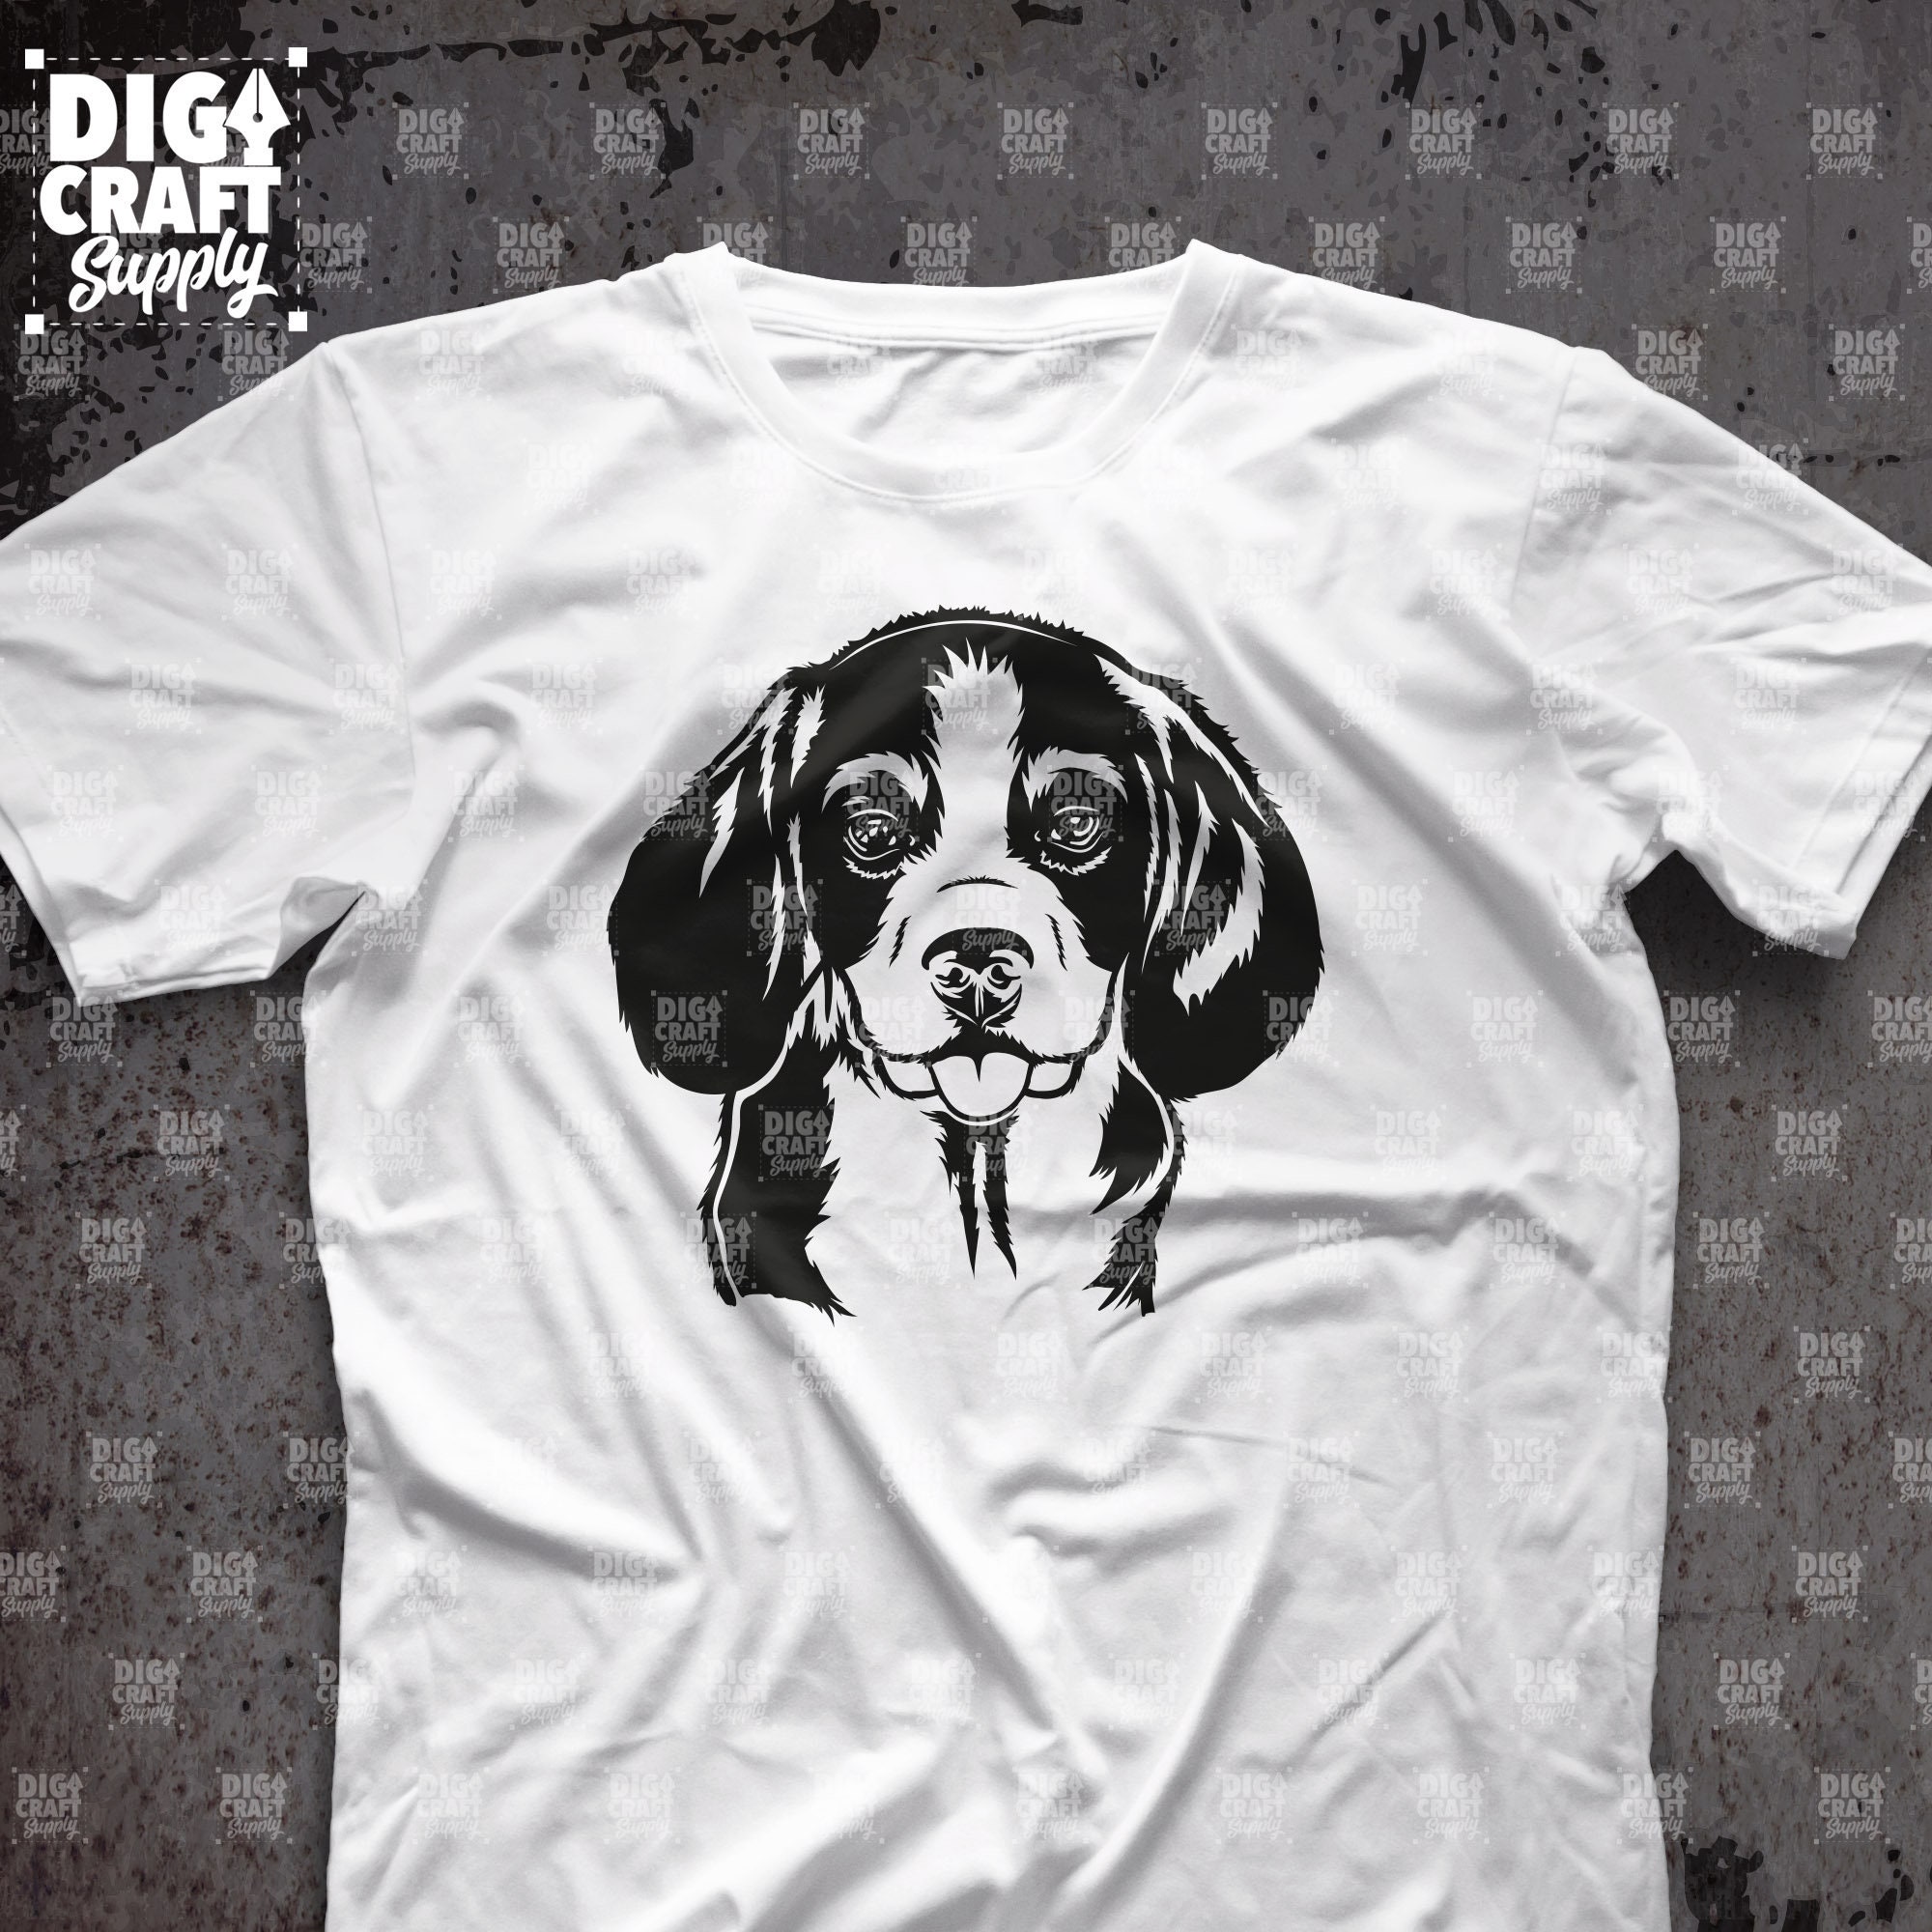 Beagle Dog Chicago Cubs Shirt - High-Quality Printed Brand